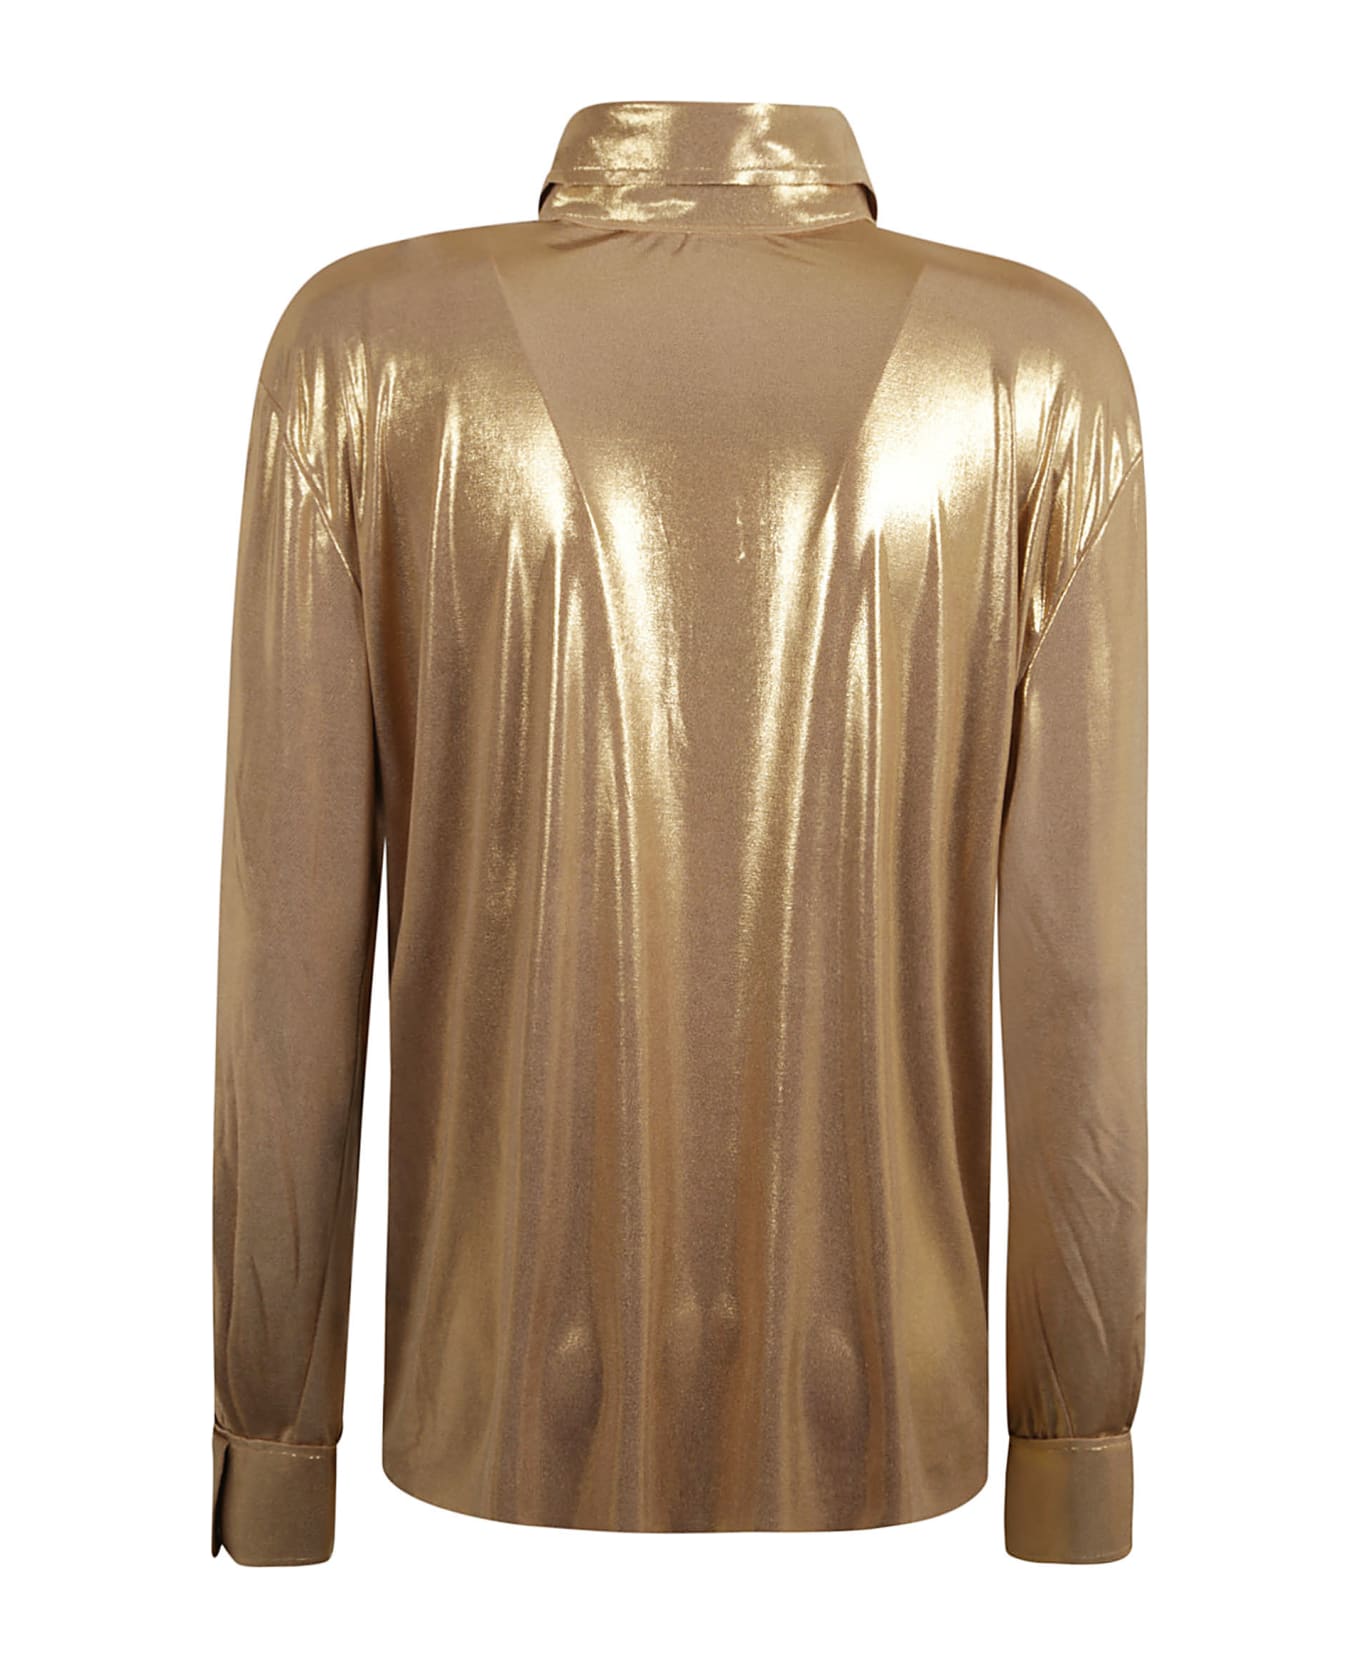 Norma Kamali Shiny Metallic Shirt - Gold